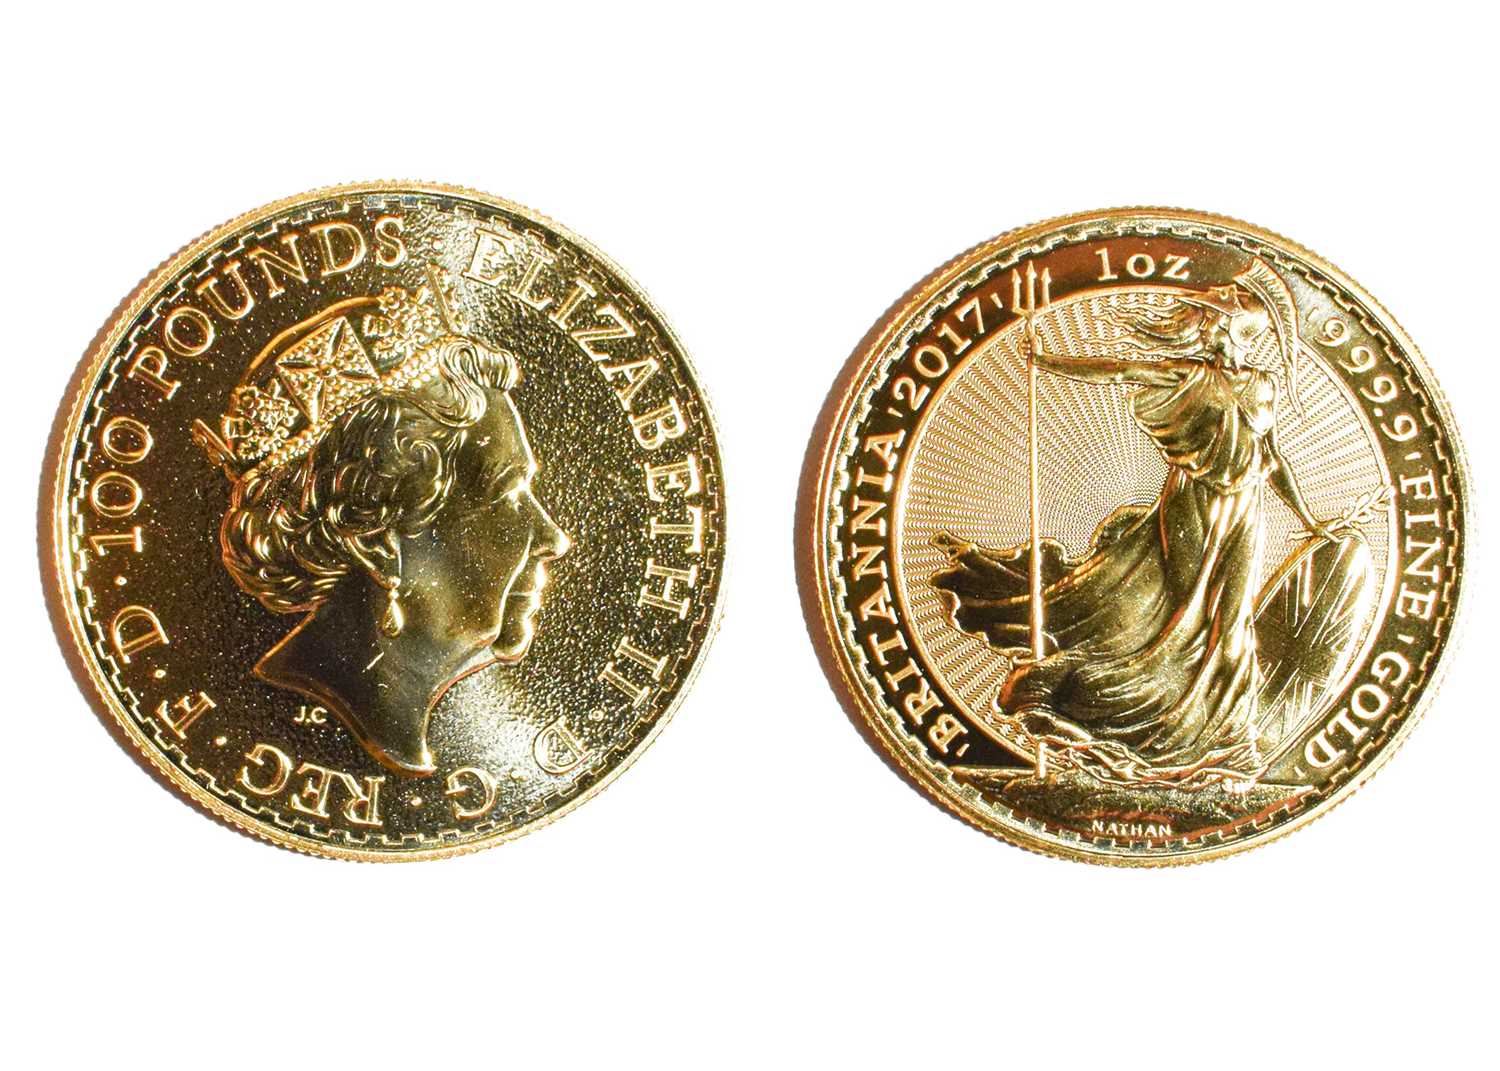 Lot 190 - 1oz Britannia gold coin